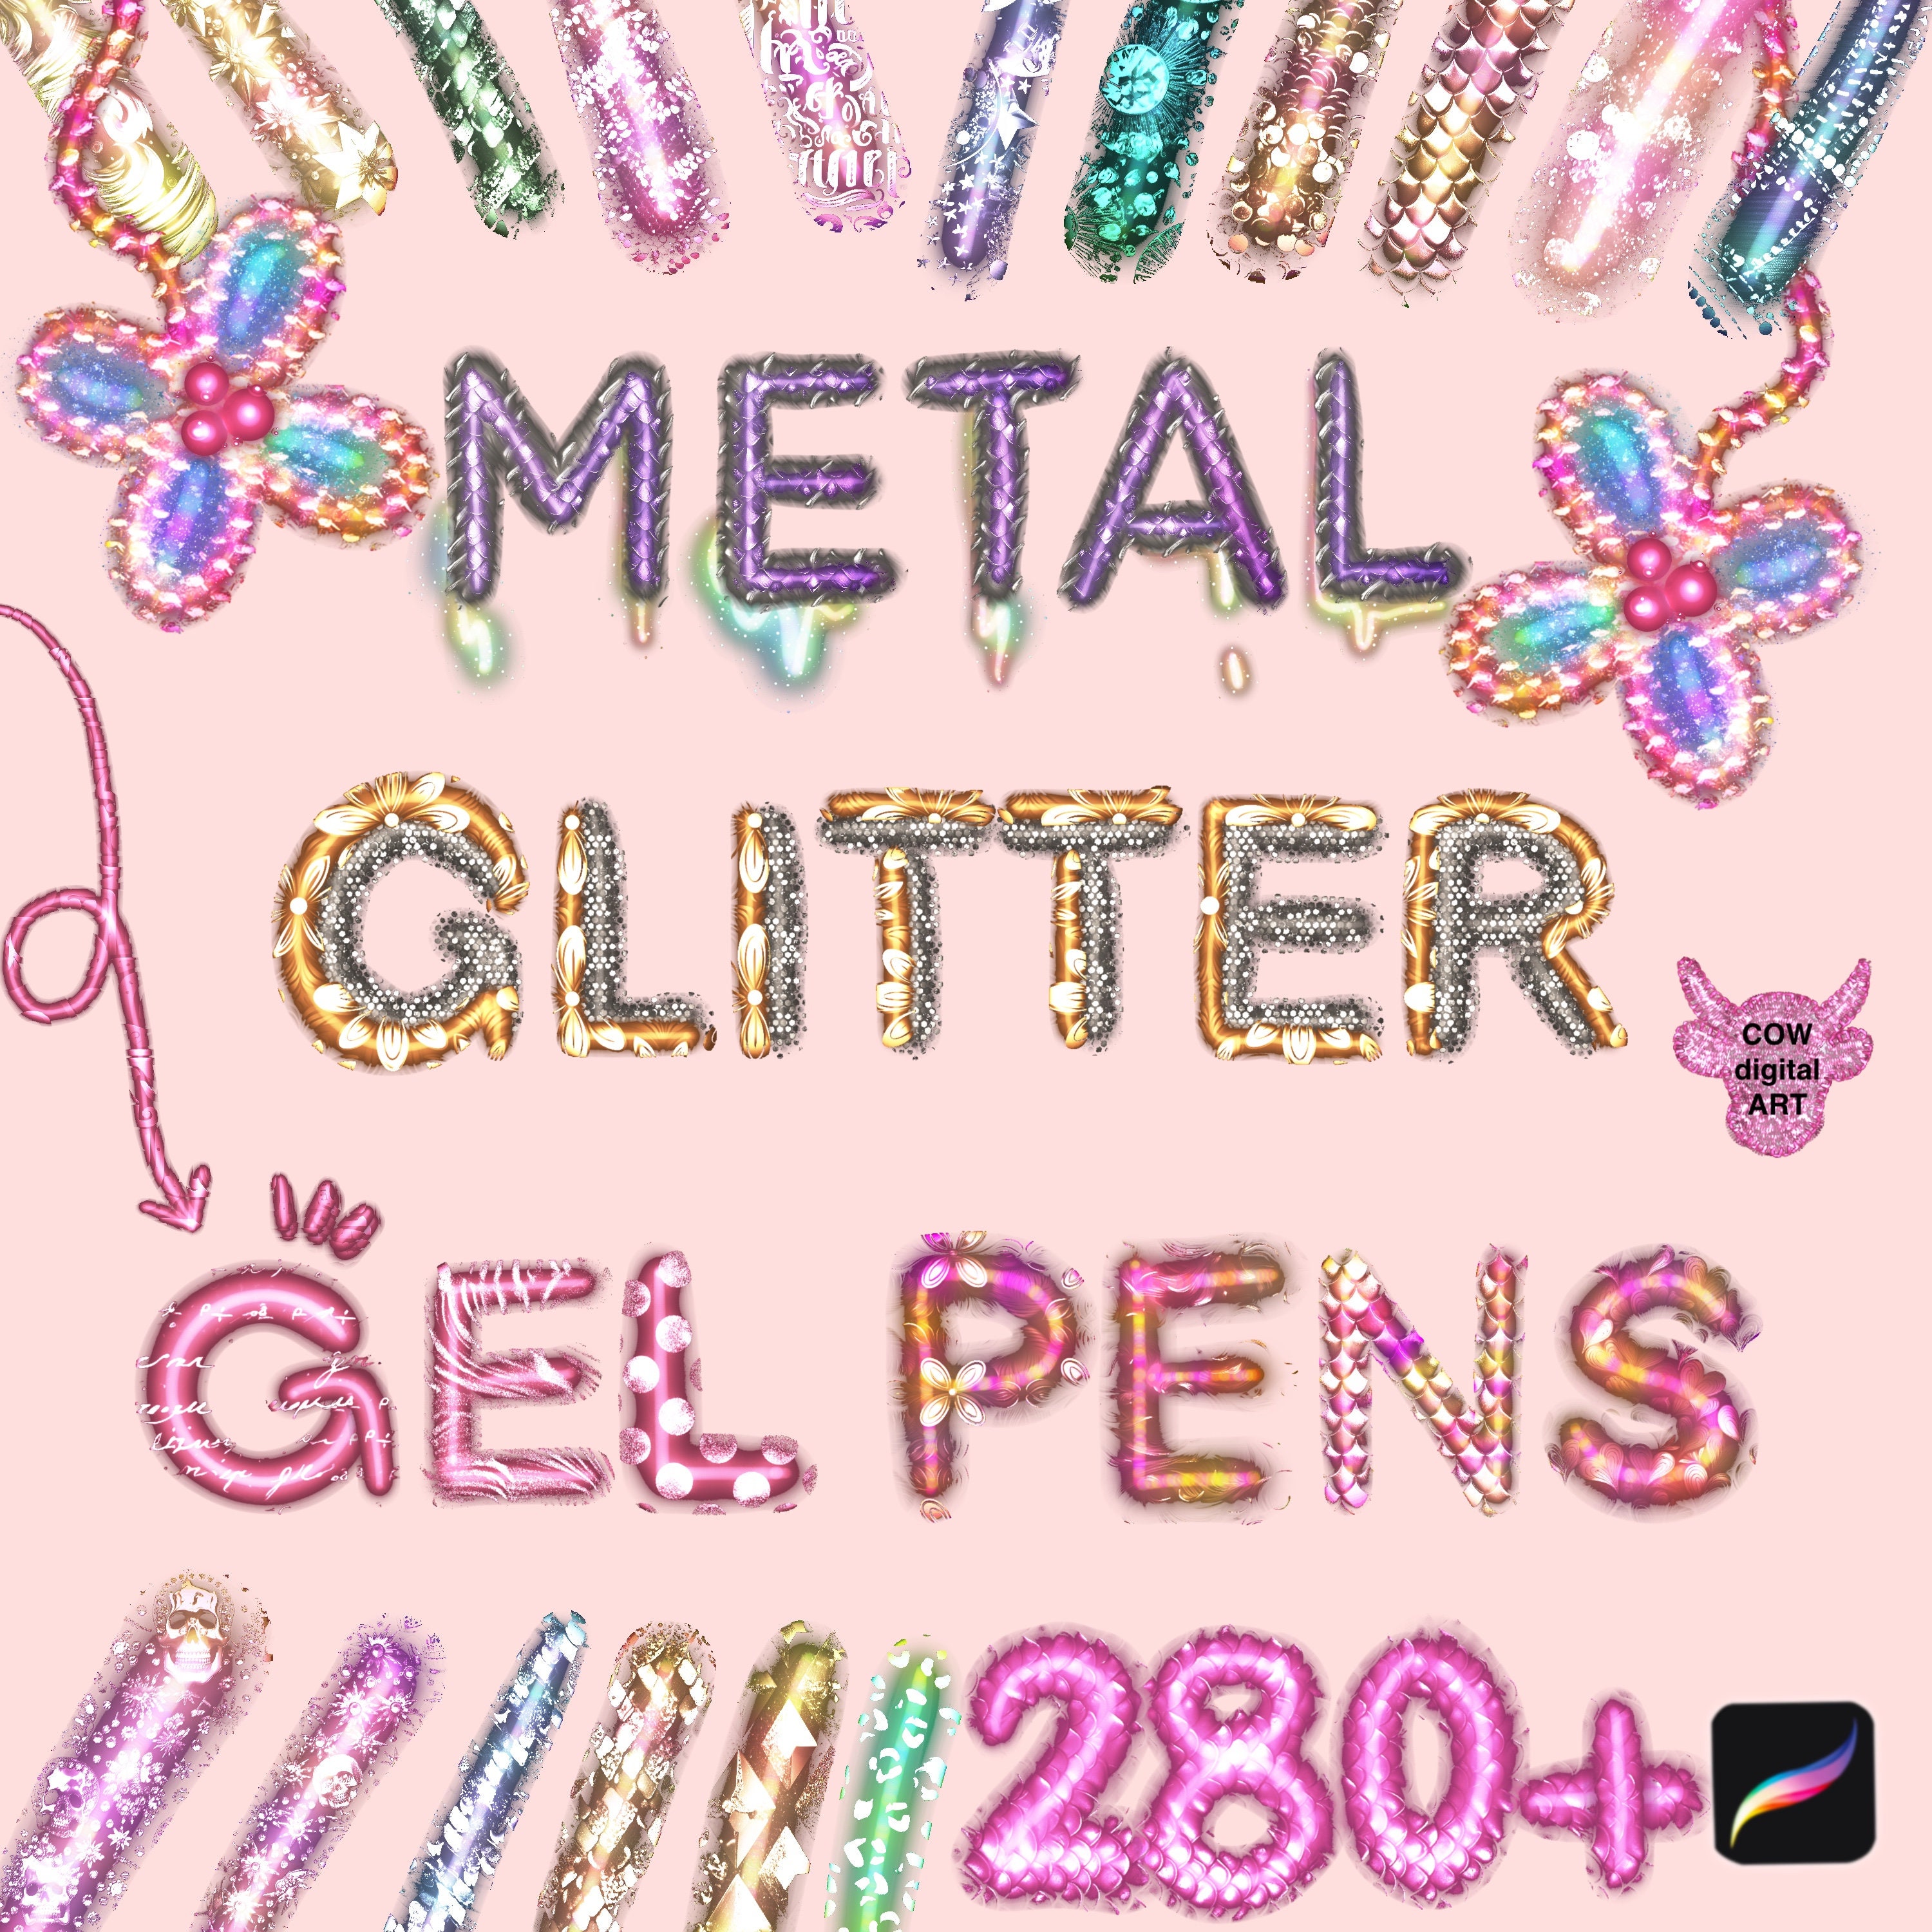 Pentel Hybrid Dual Metallic Pens, 9 Pack, Glitter Gel Pens, Gel Pen Set,  Journaling Pens, Scrapbooking Pens, Sparkly Pens 